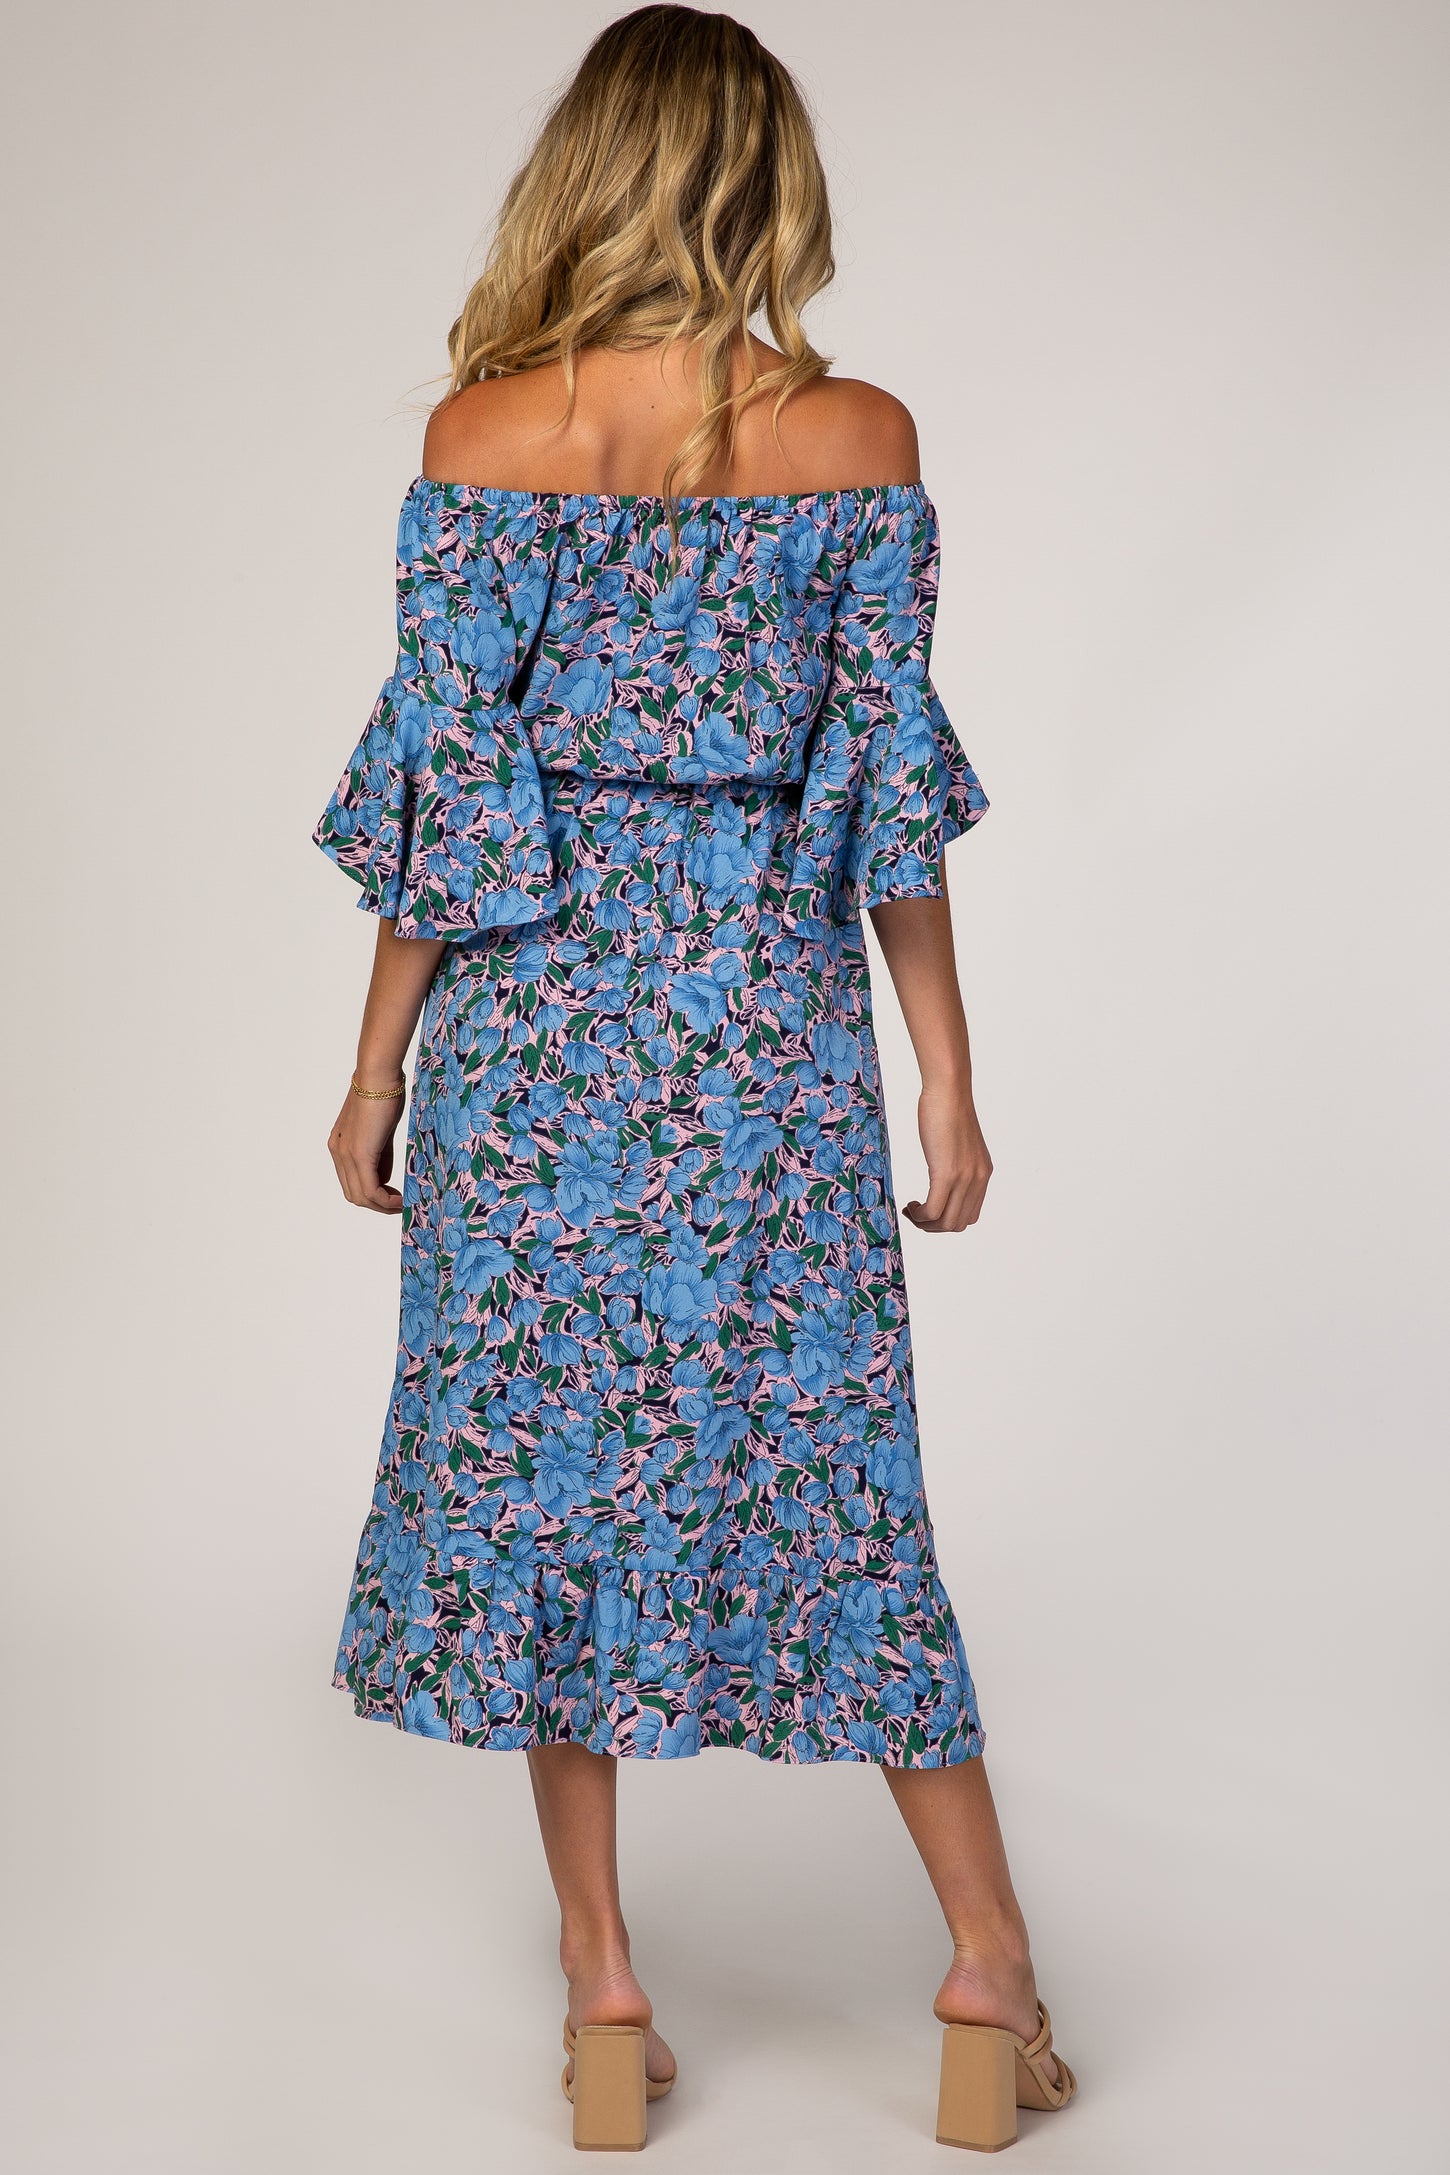 Blue Floral Off Shoulder Ruffle Maternity Dress– PinkBlush